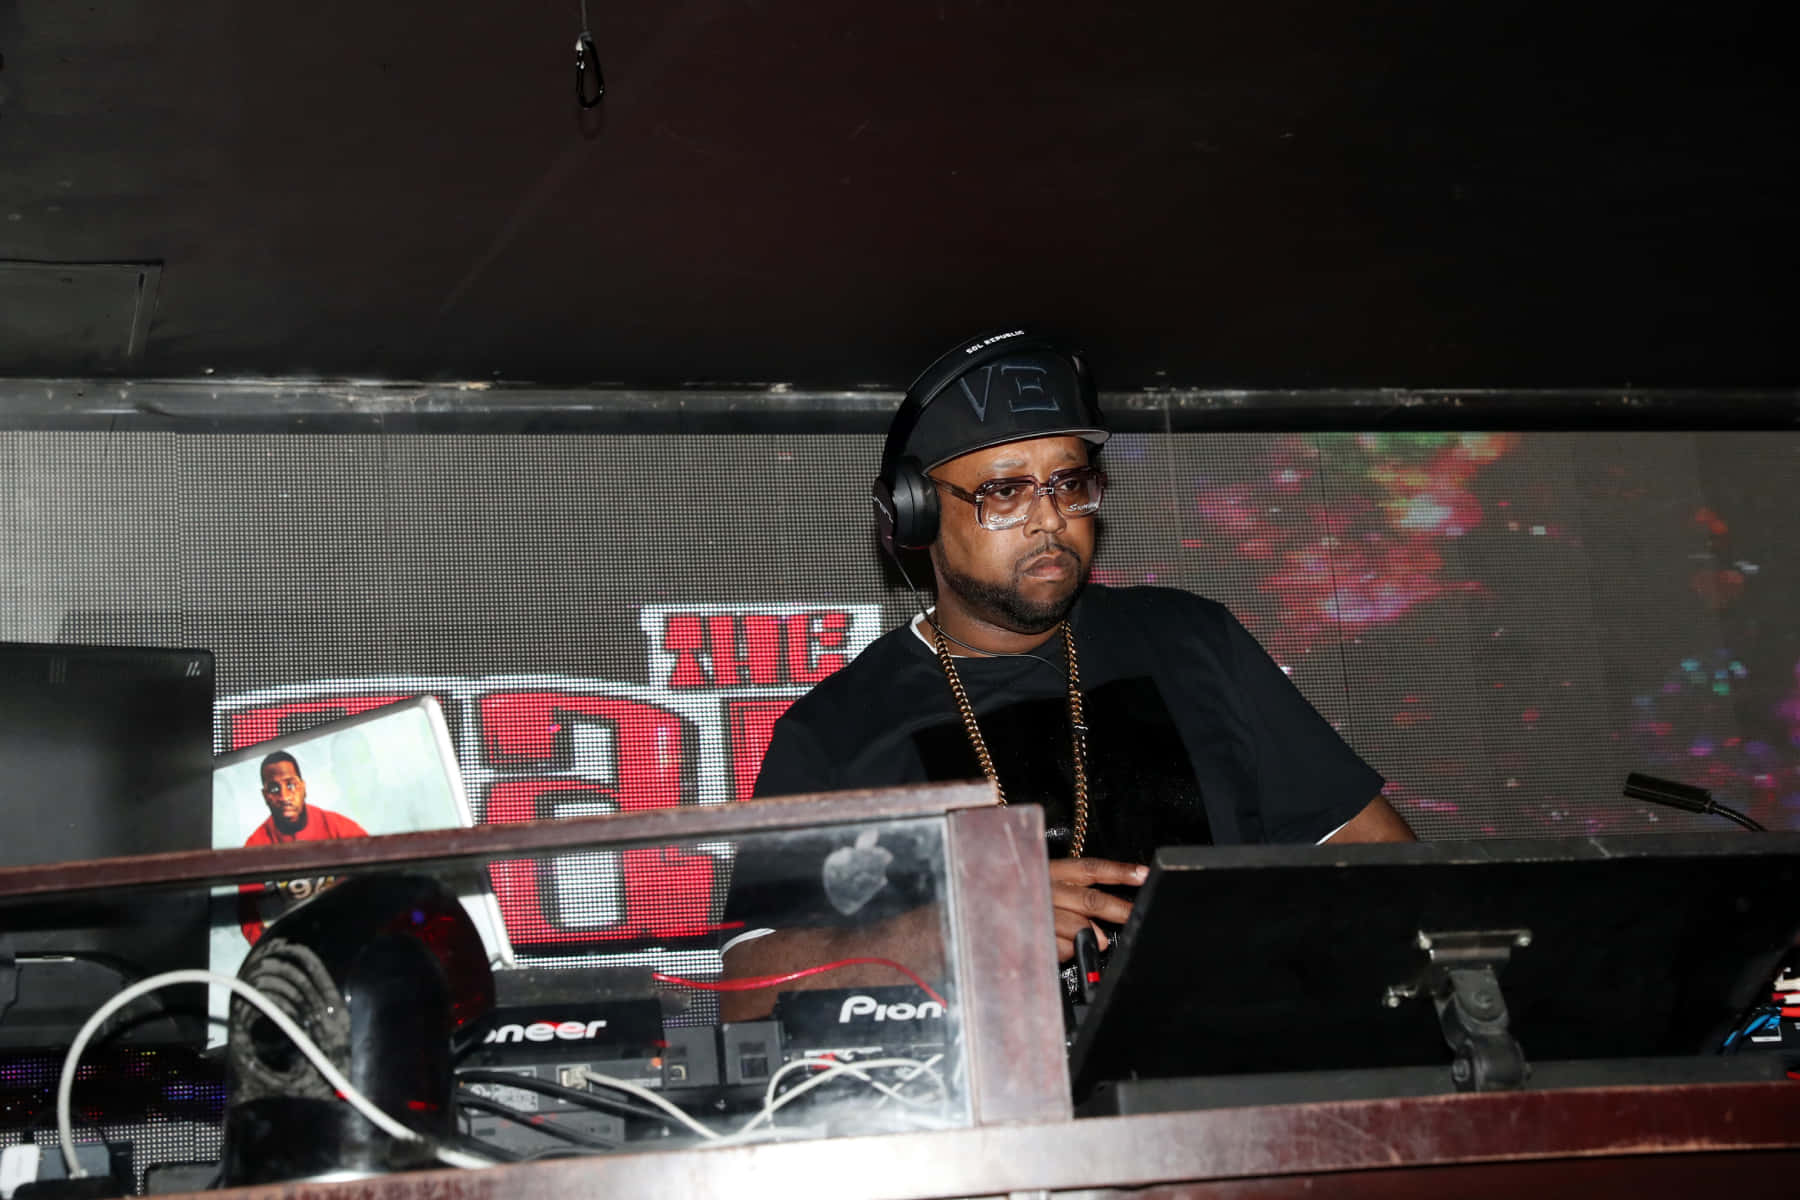 DJ Mixing Music at a Nightclub